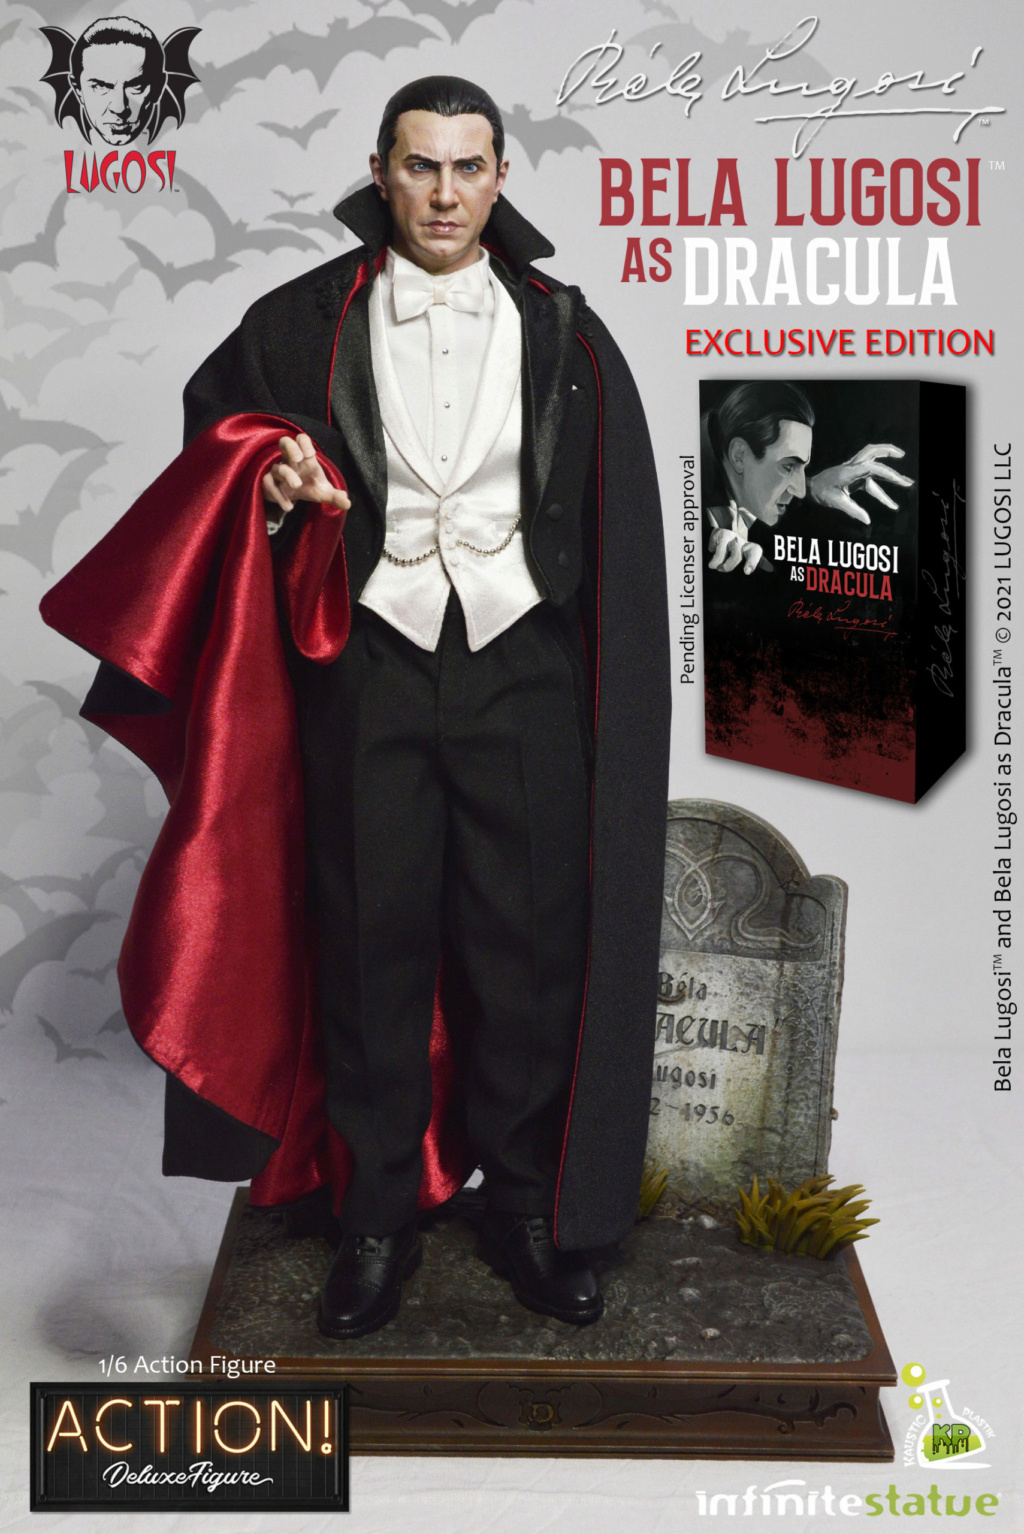 BelaLugosi - NEW PRODUCT: Kaustic Plastik & Infinite Statue: Bela Lugosi as Dracula (standard, deluxe & exclusive) action figure 2894